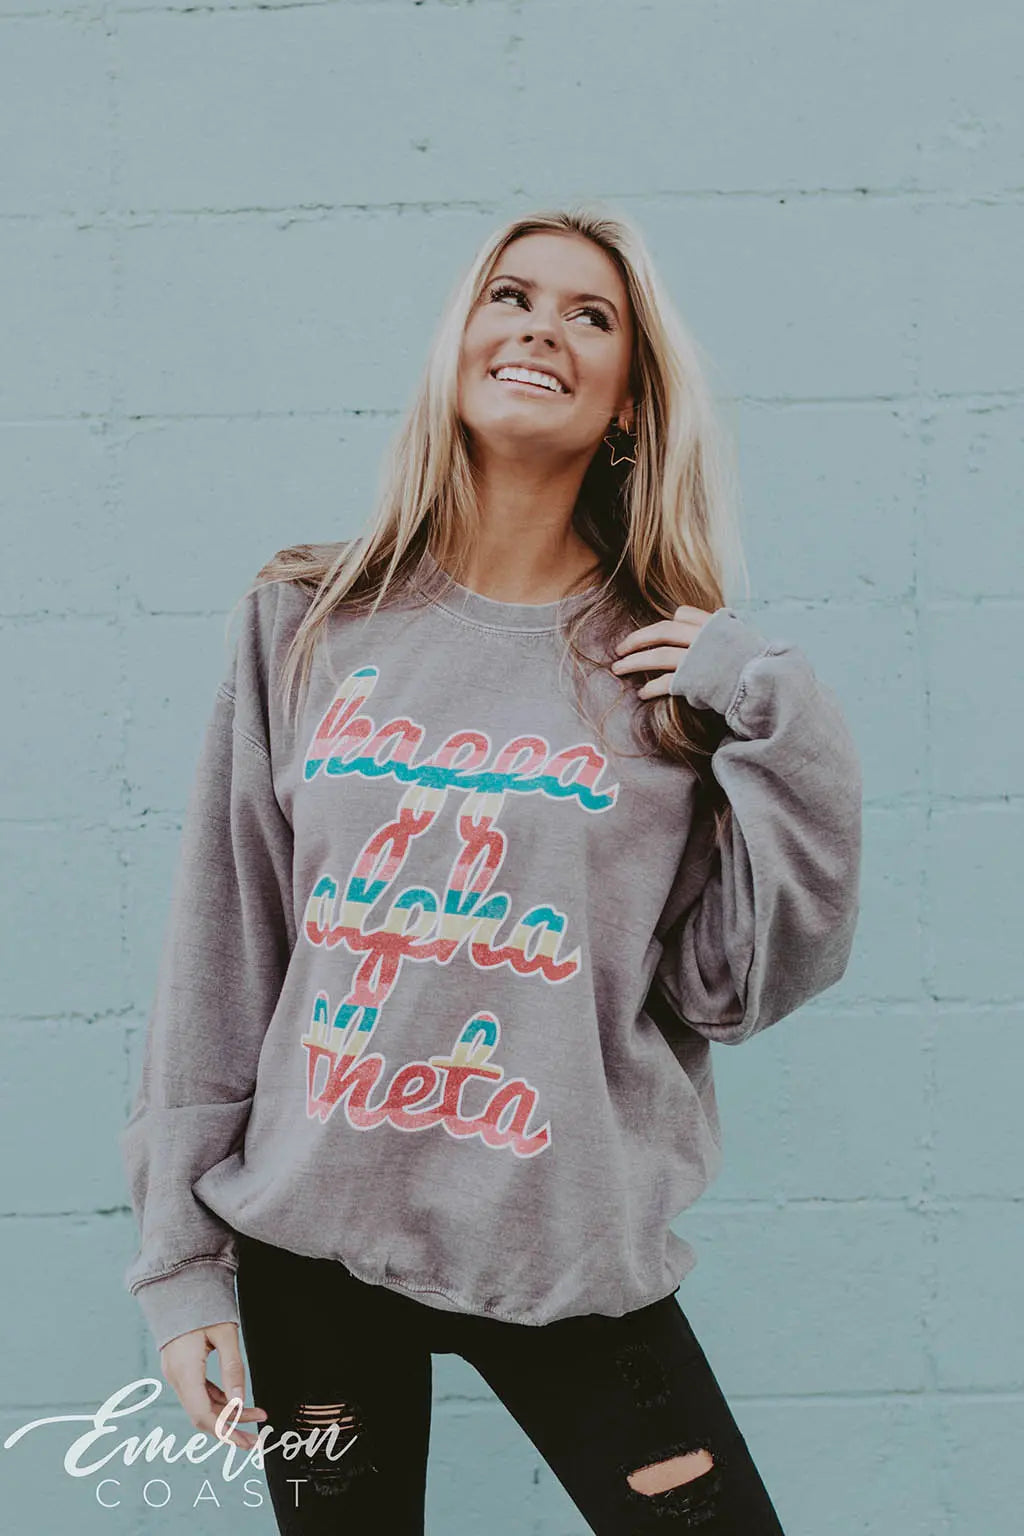 Kappa Alpha Theta Colorful PR Bomber Sweatshirt